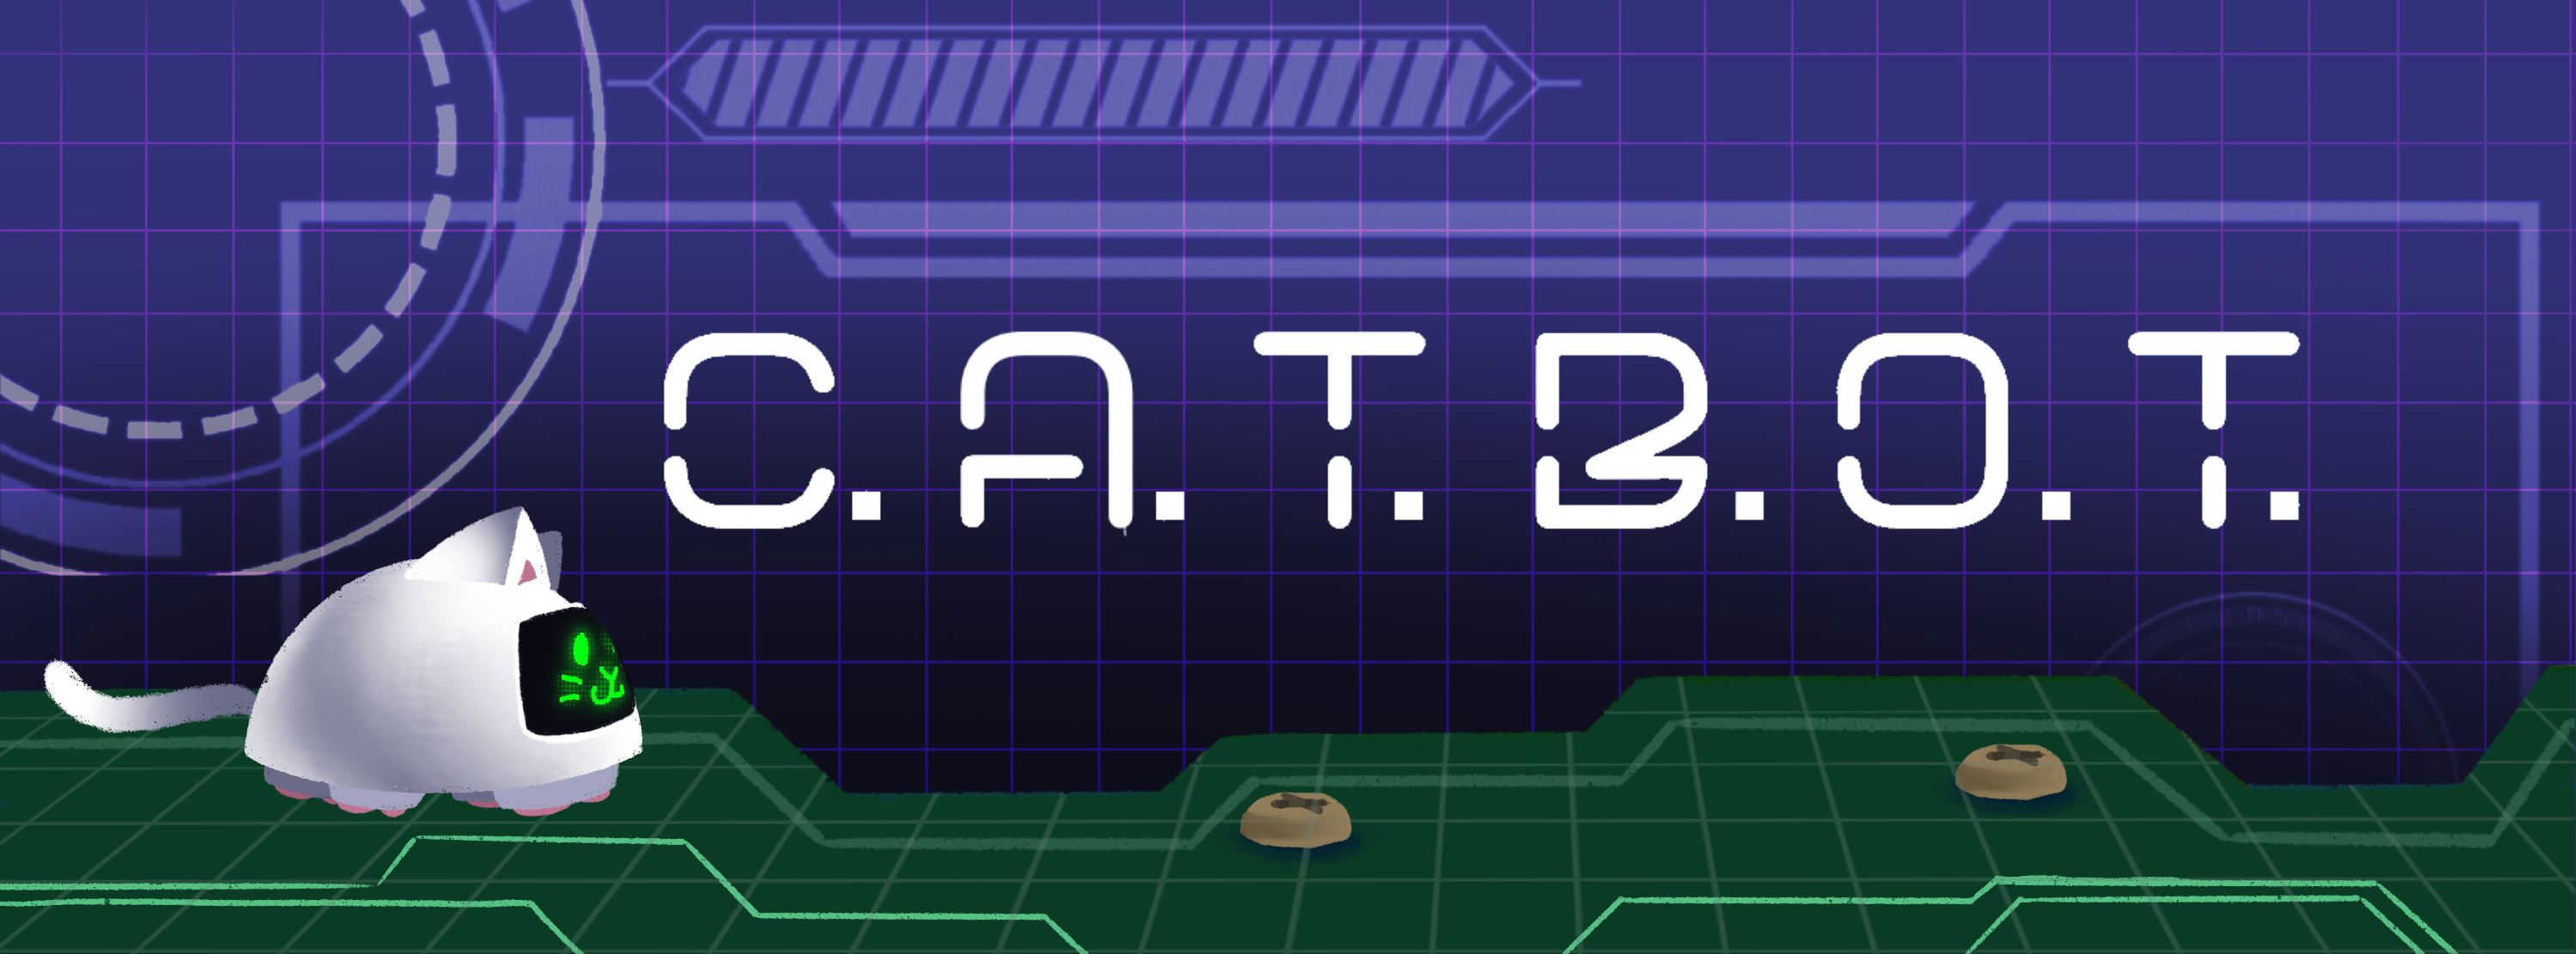 C.A.T.B.O.T. Circuit Builder - Demo